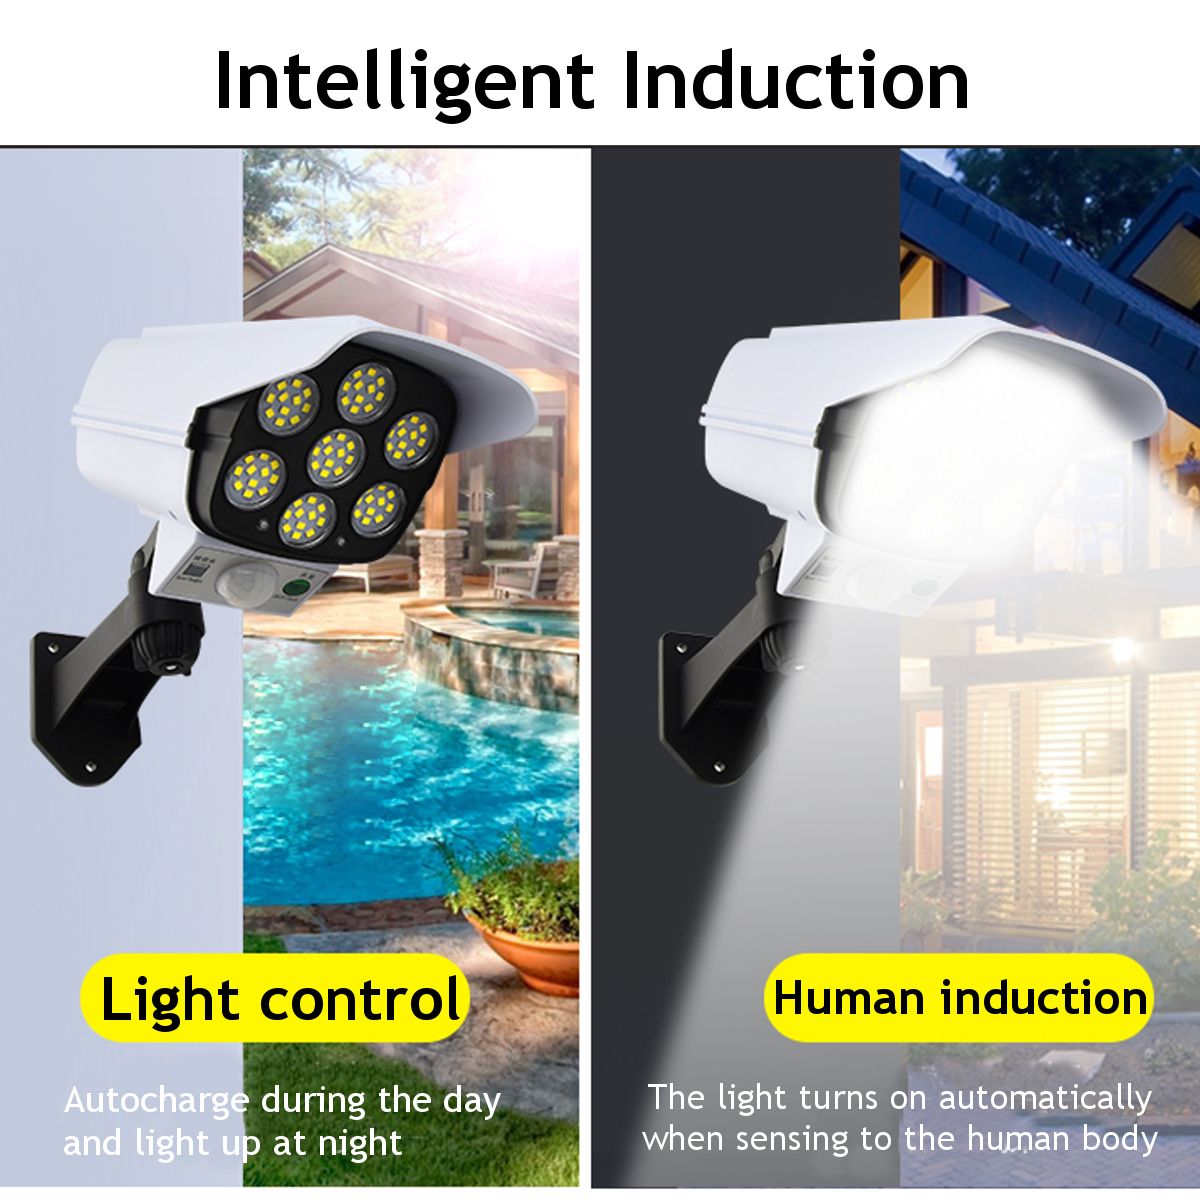 77-LED-Outdoor-Dummy-Artificial-Camera-Like-Solar-Motion-Sensor-Lights-Security-Wall-Lamp-Floodlight-1764529